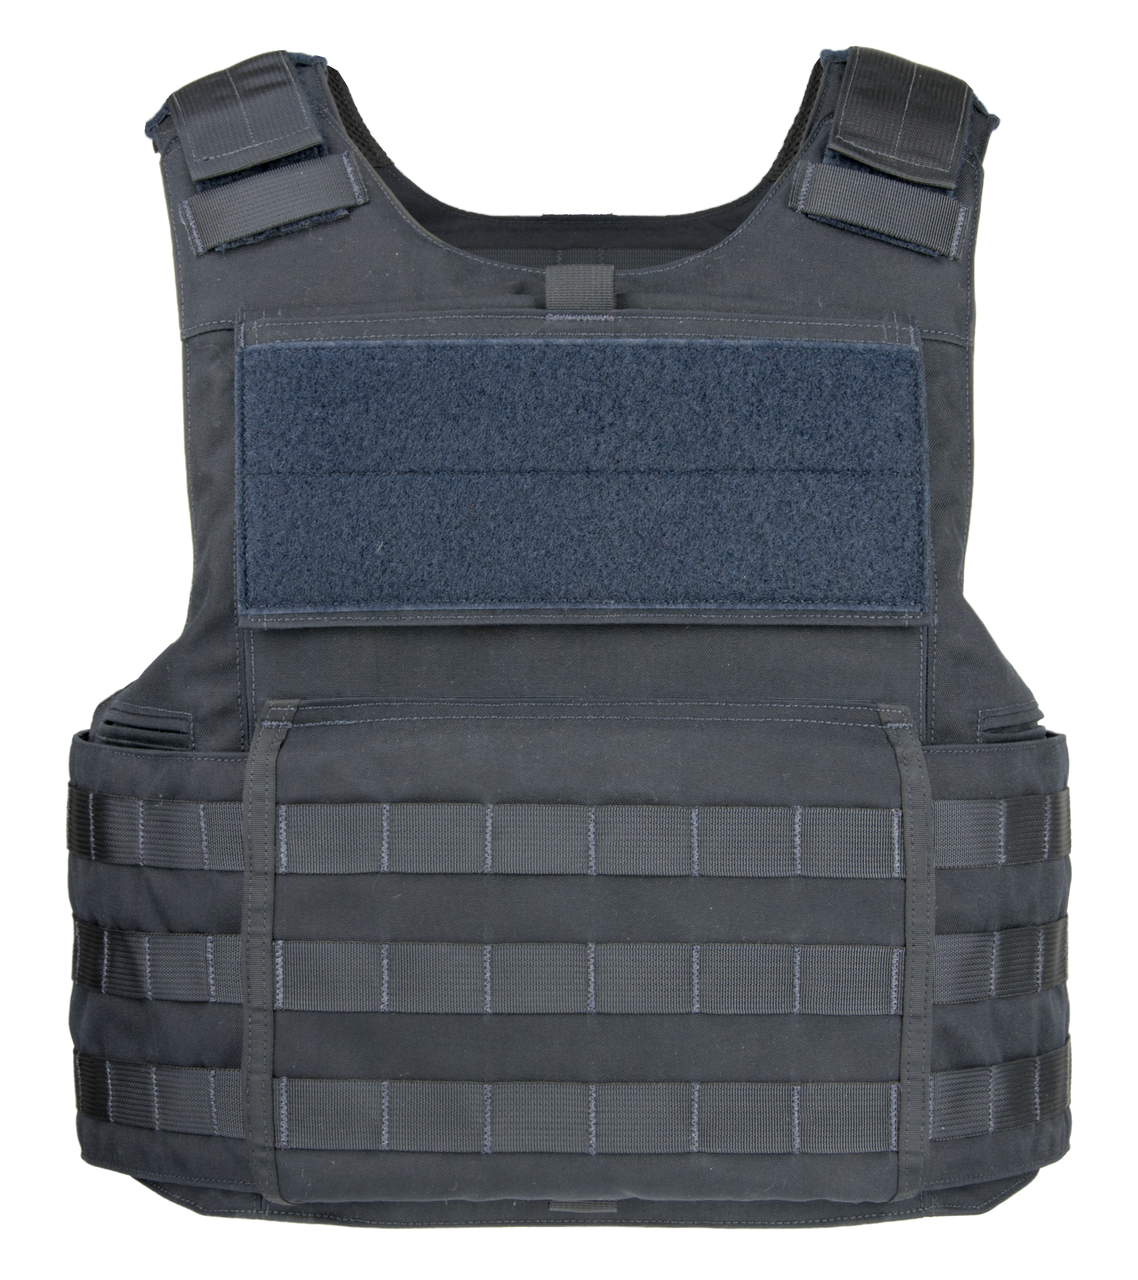 Armor Express ® Hard Core PT Men's Exterior Bulletproof Body Armor Vest ...